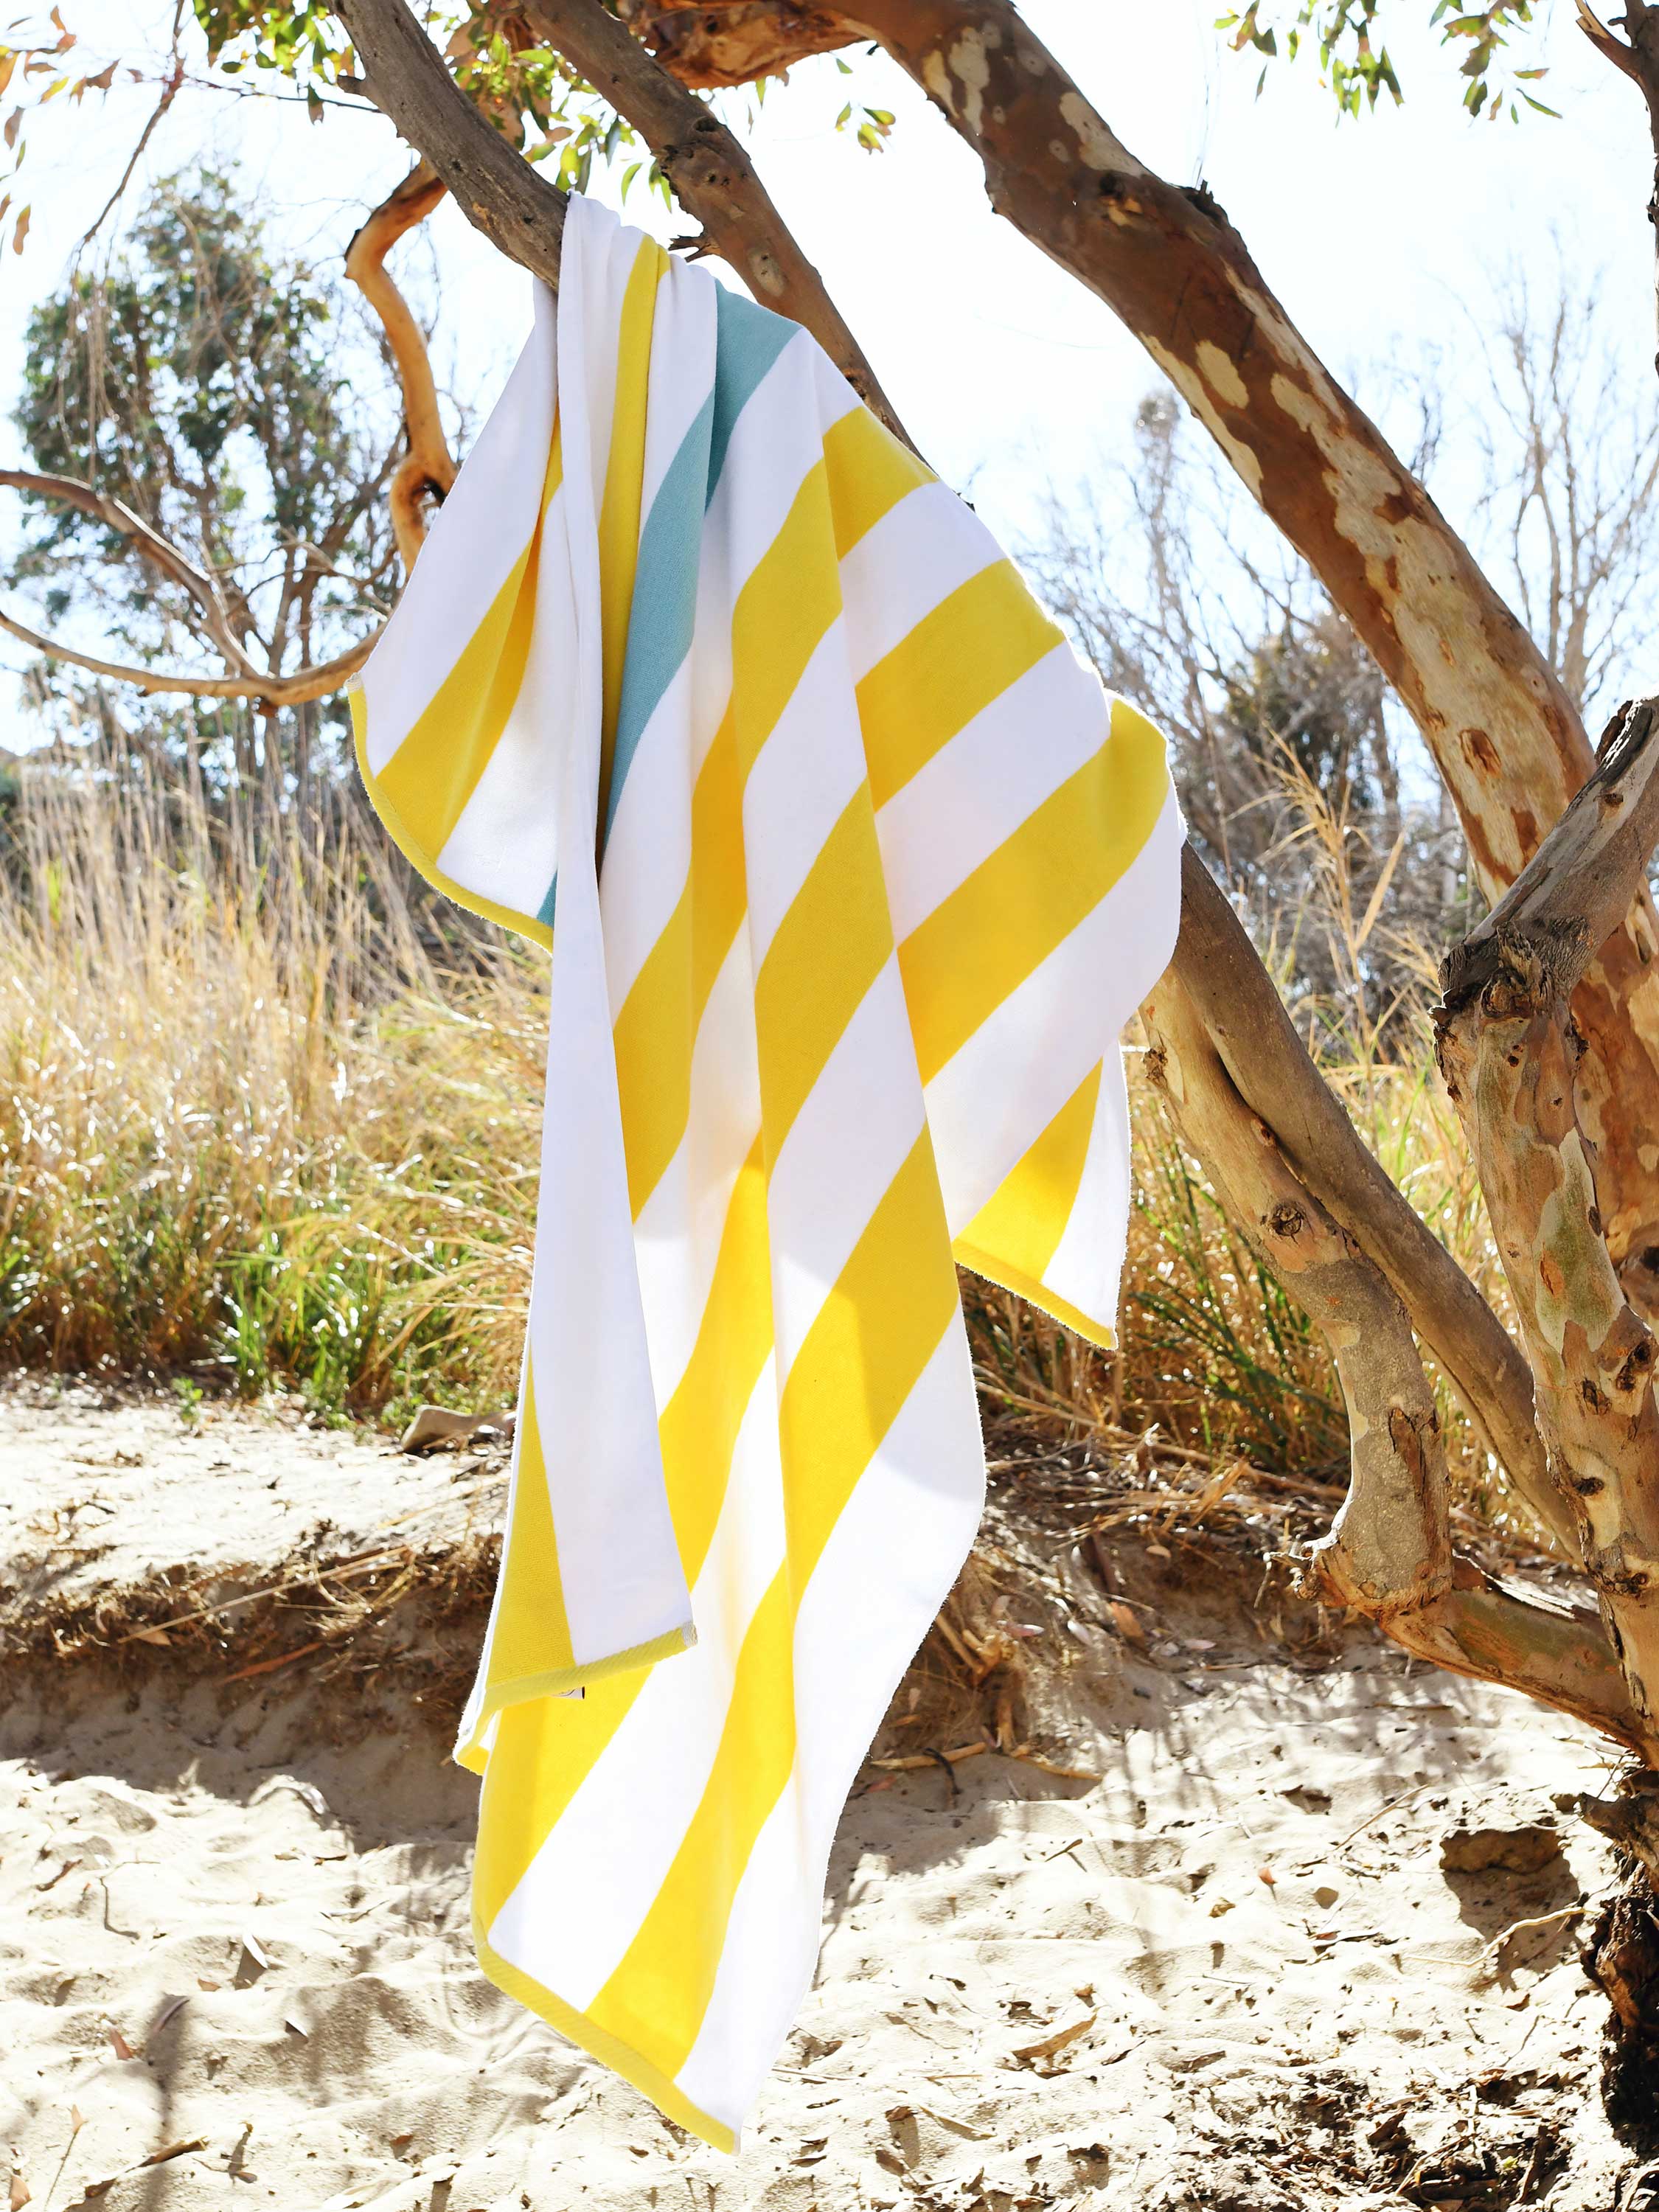 2-Set Yellow/White Striped Cabana Beach Towels Large Pool Bath Terry Cotton